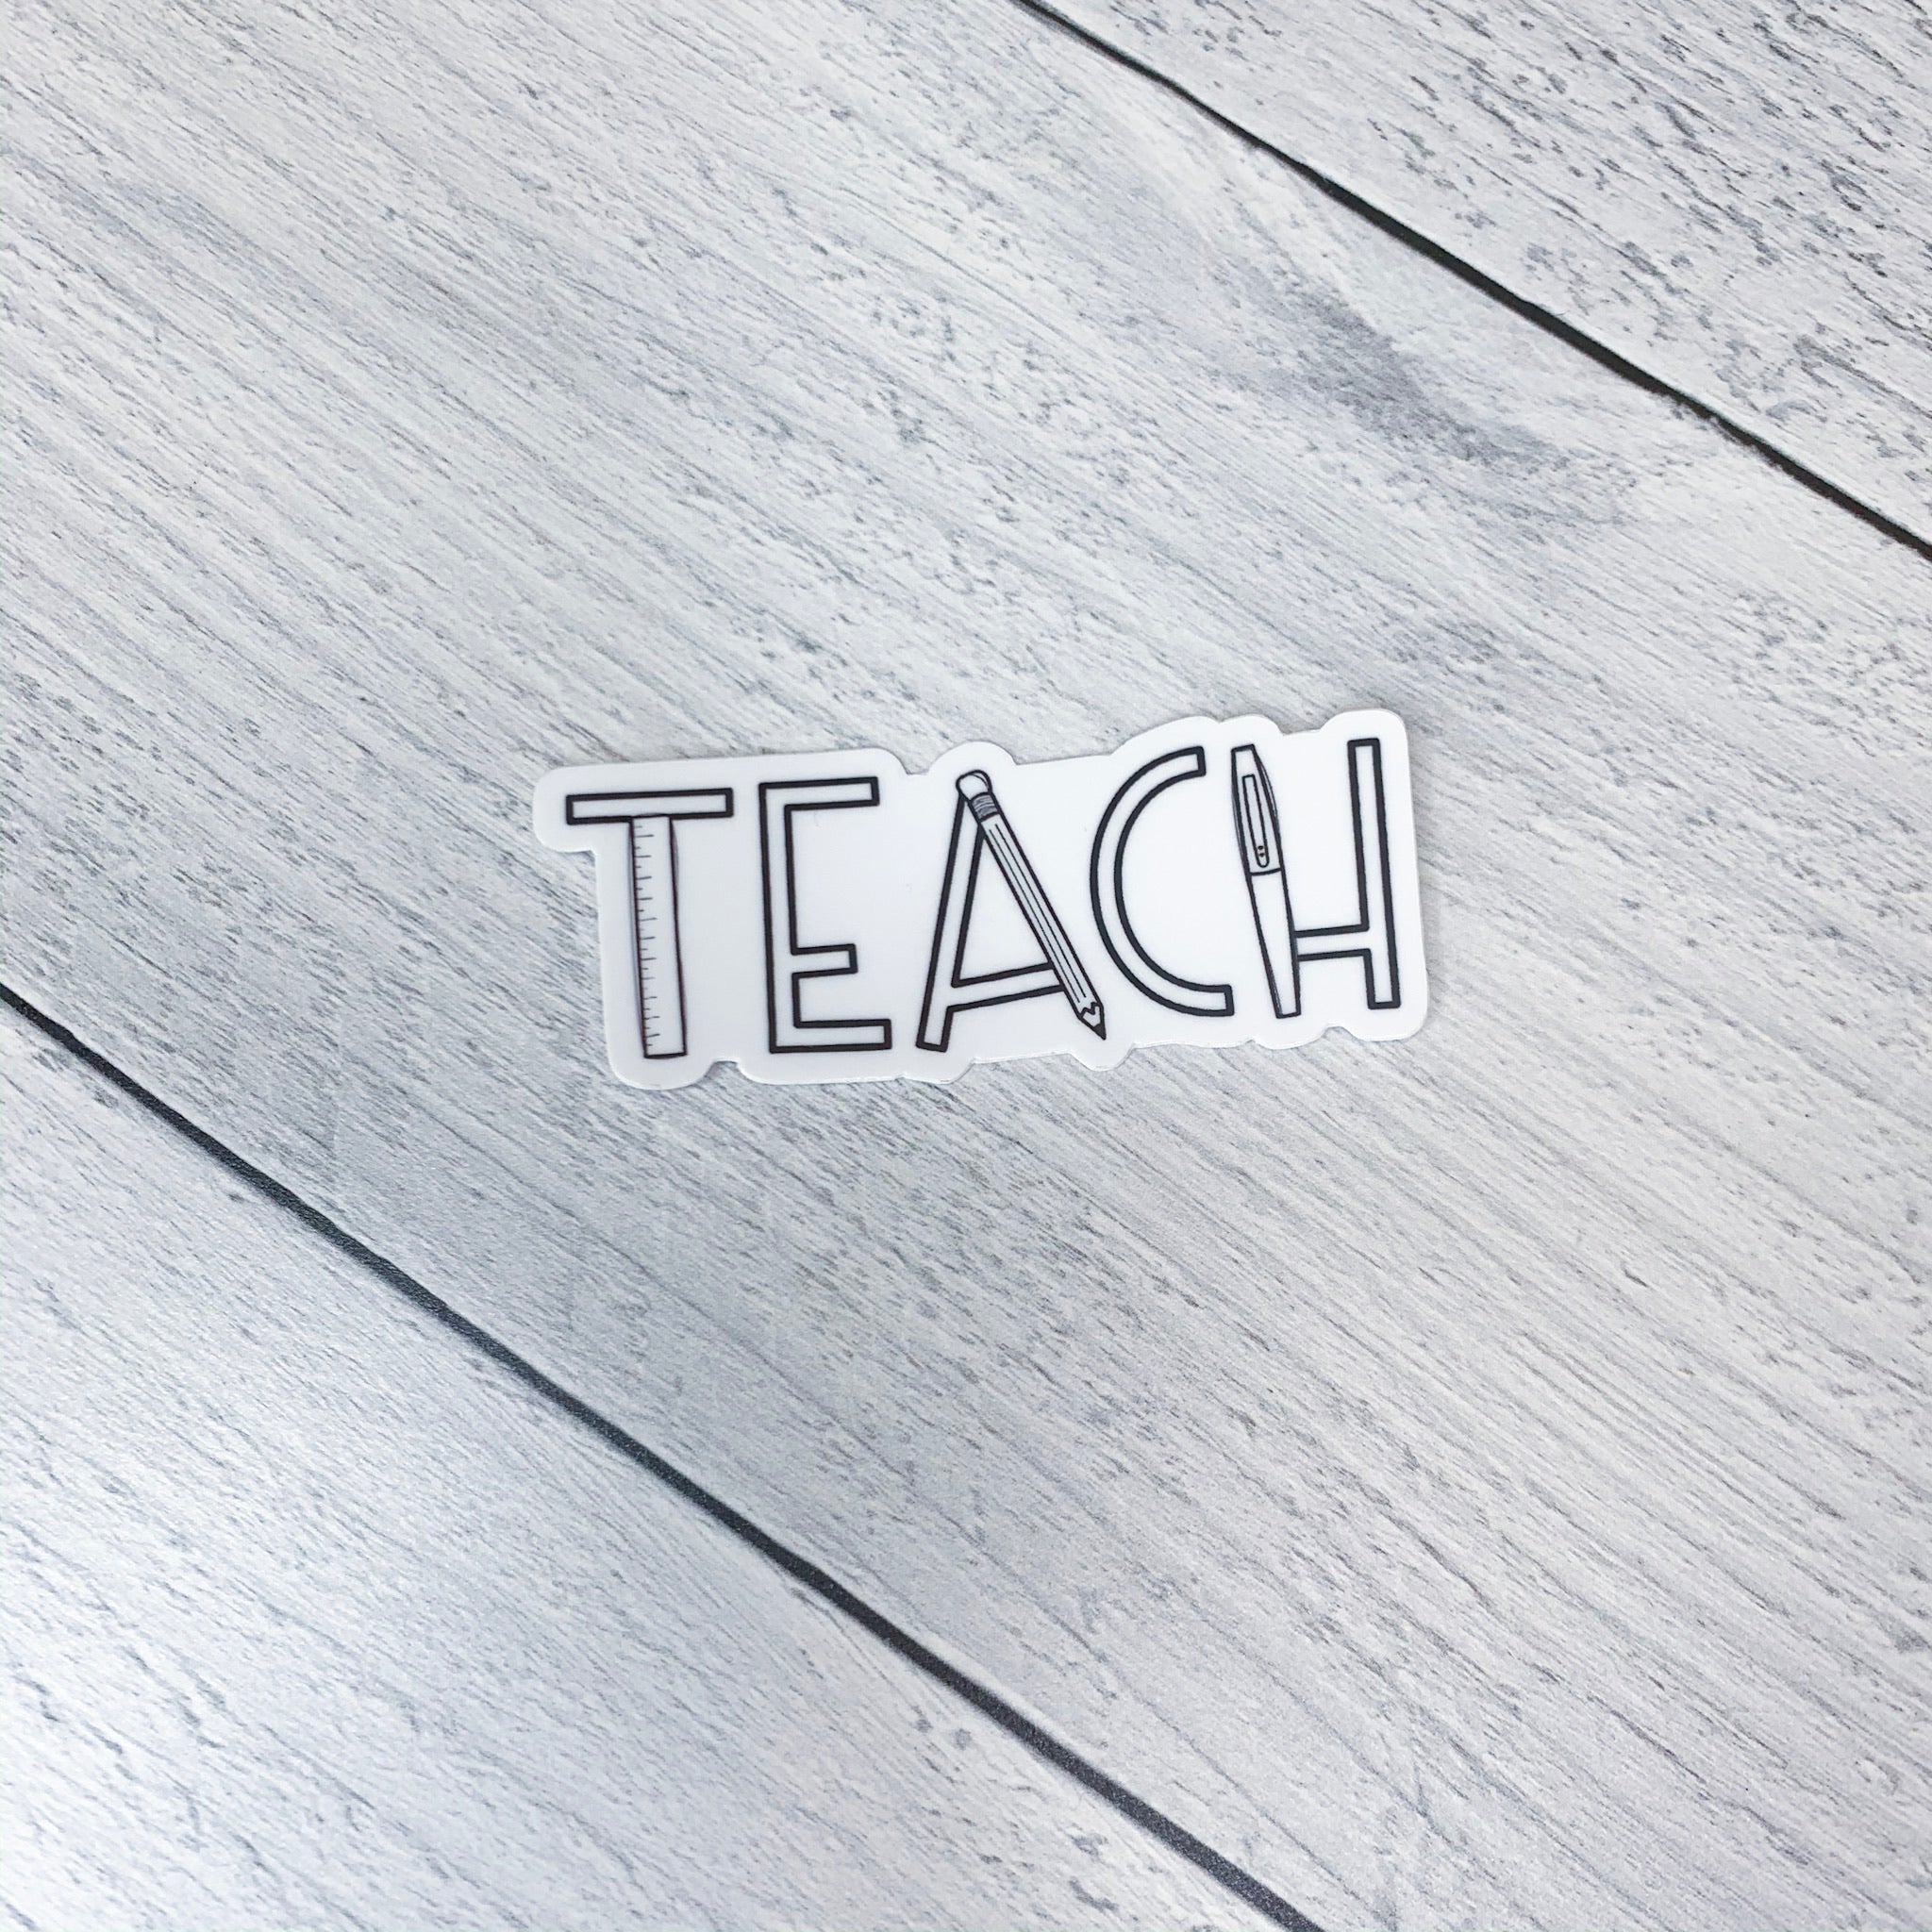 Teacher Banner – Teach Create Motivate